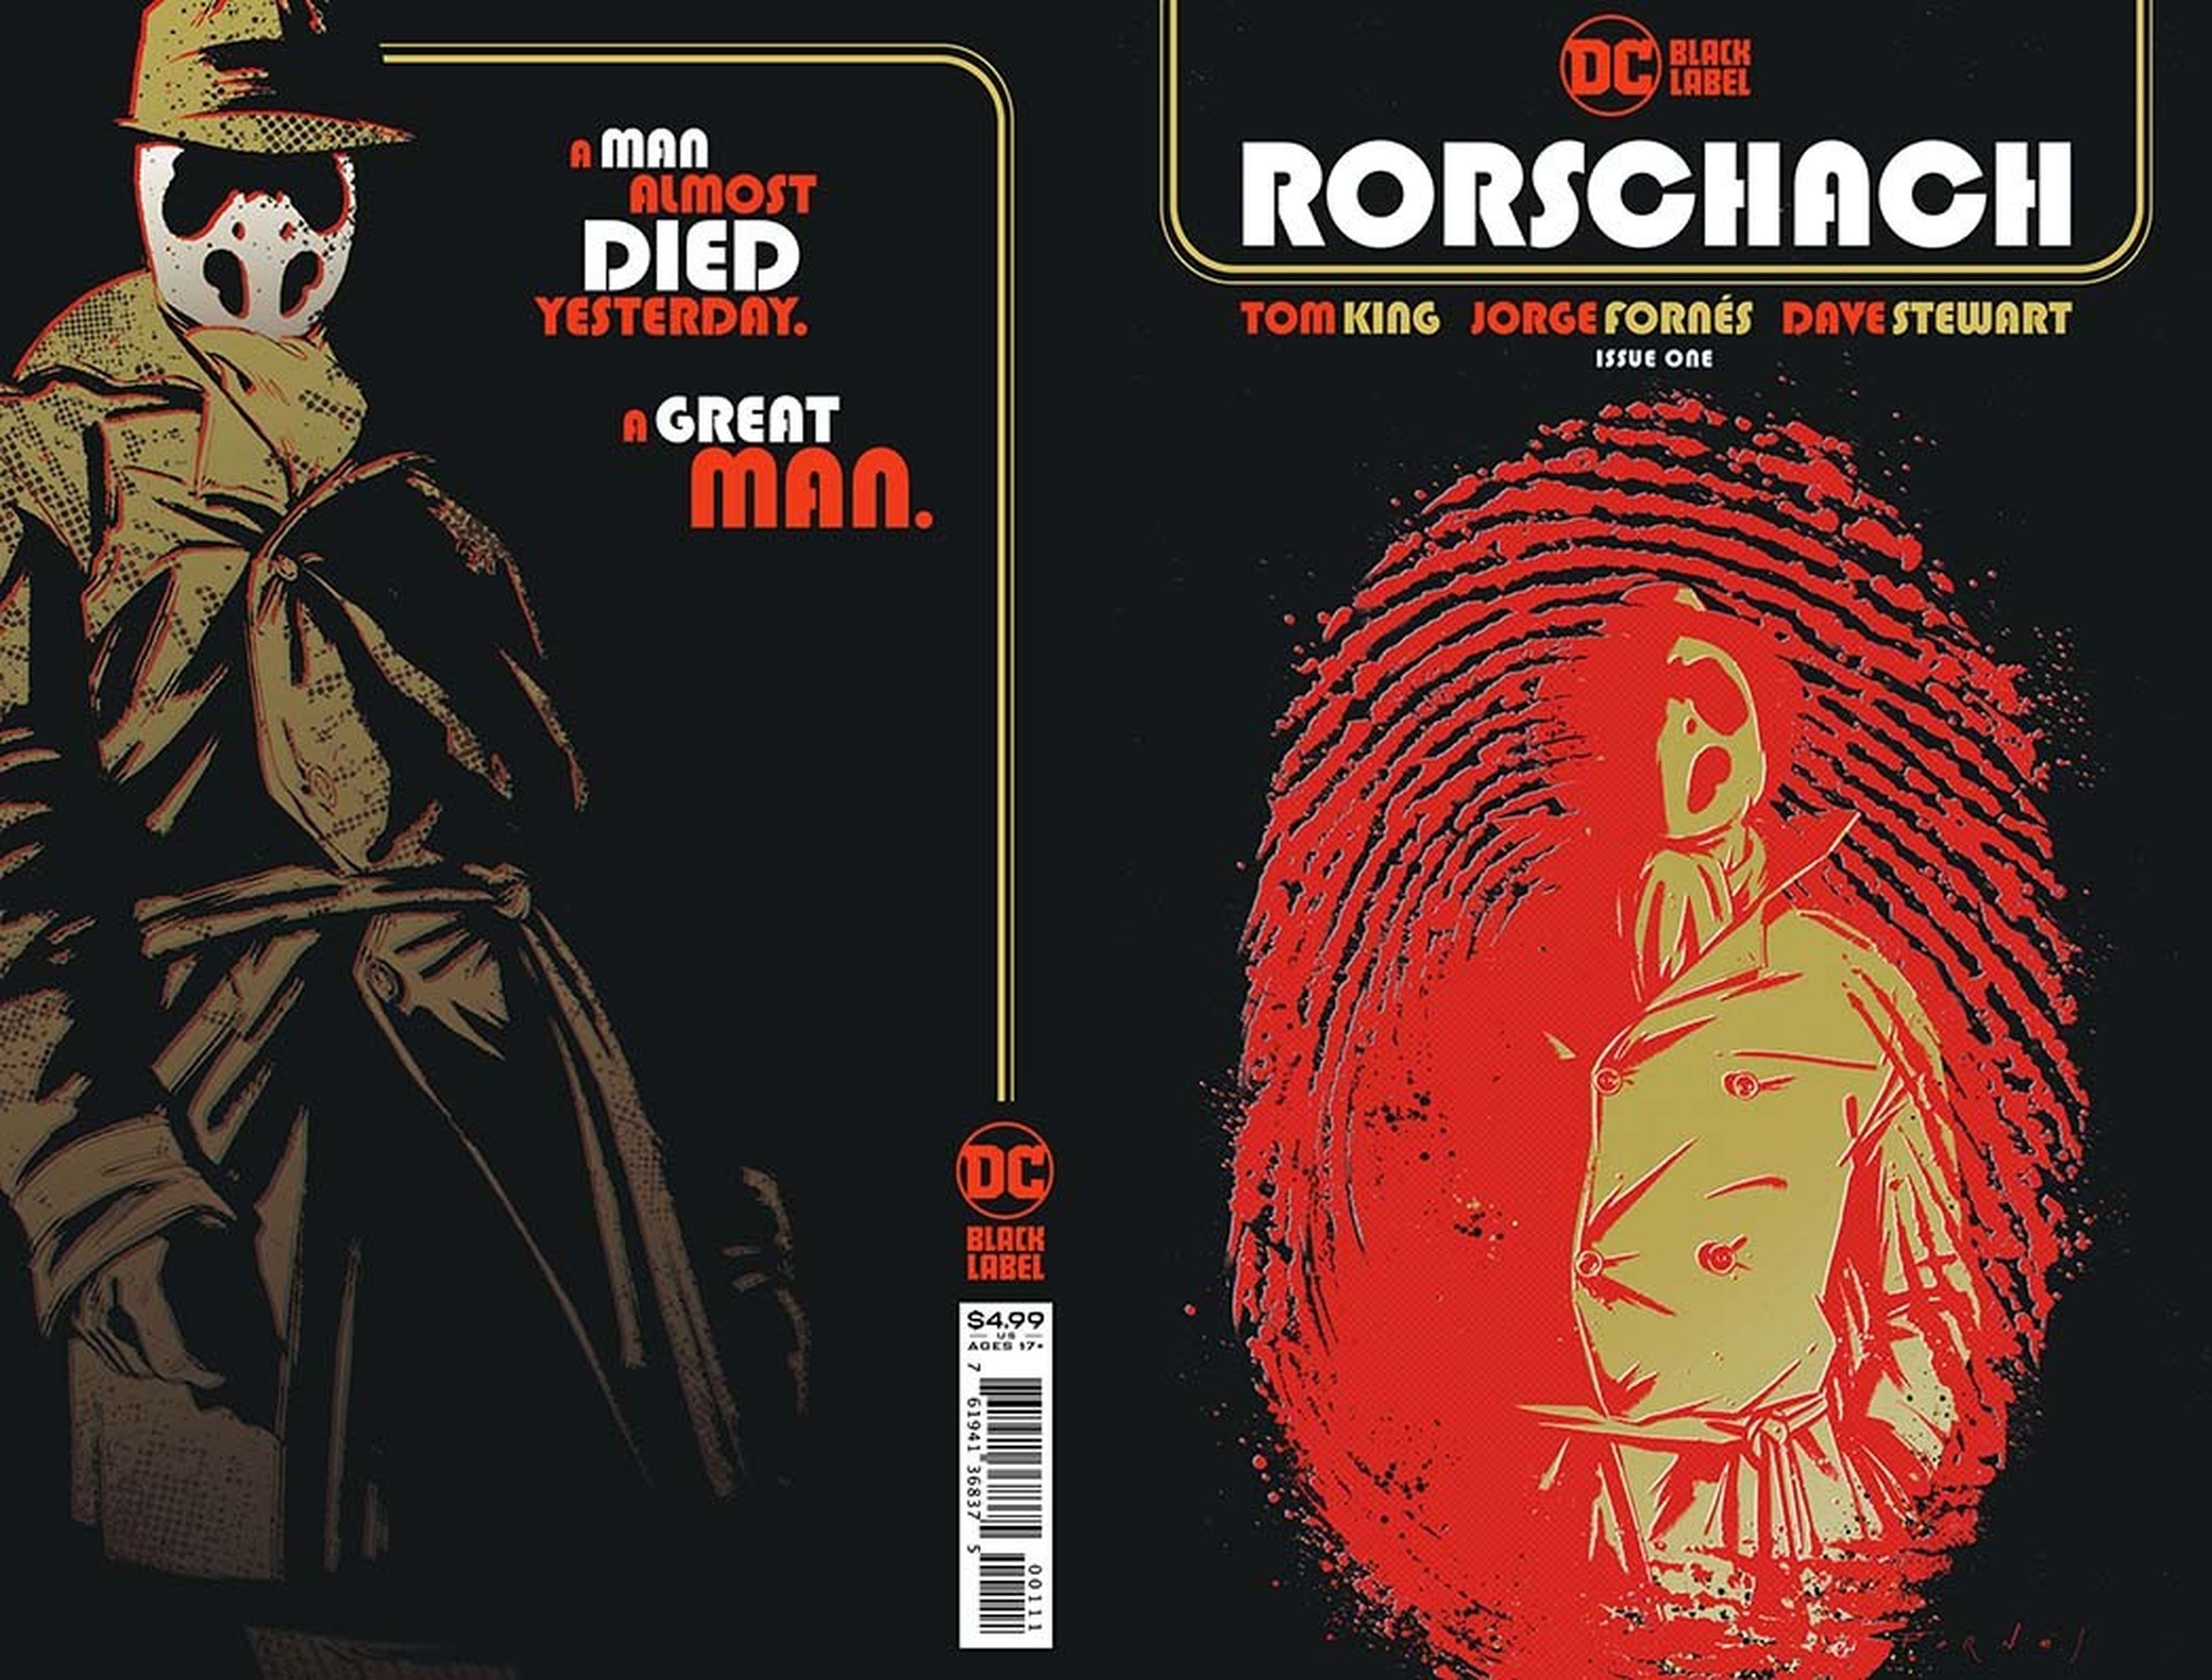 Rorschach (Tom King y Jorge Fornés)